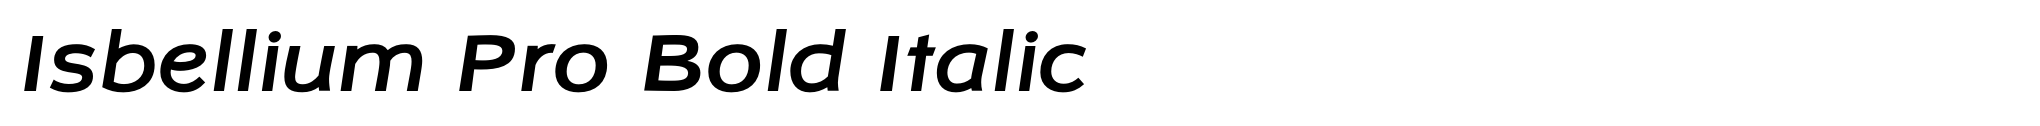 Isbellium Pro Bold Italic image